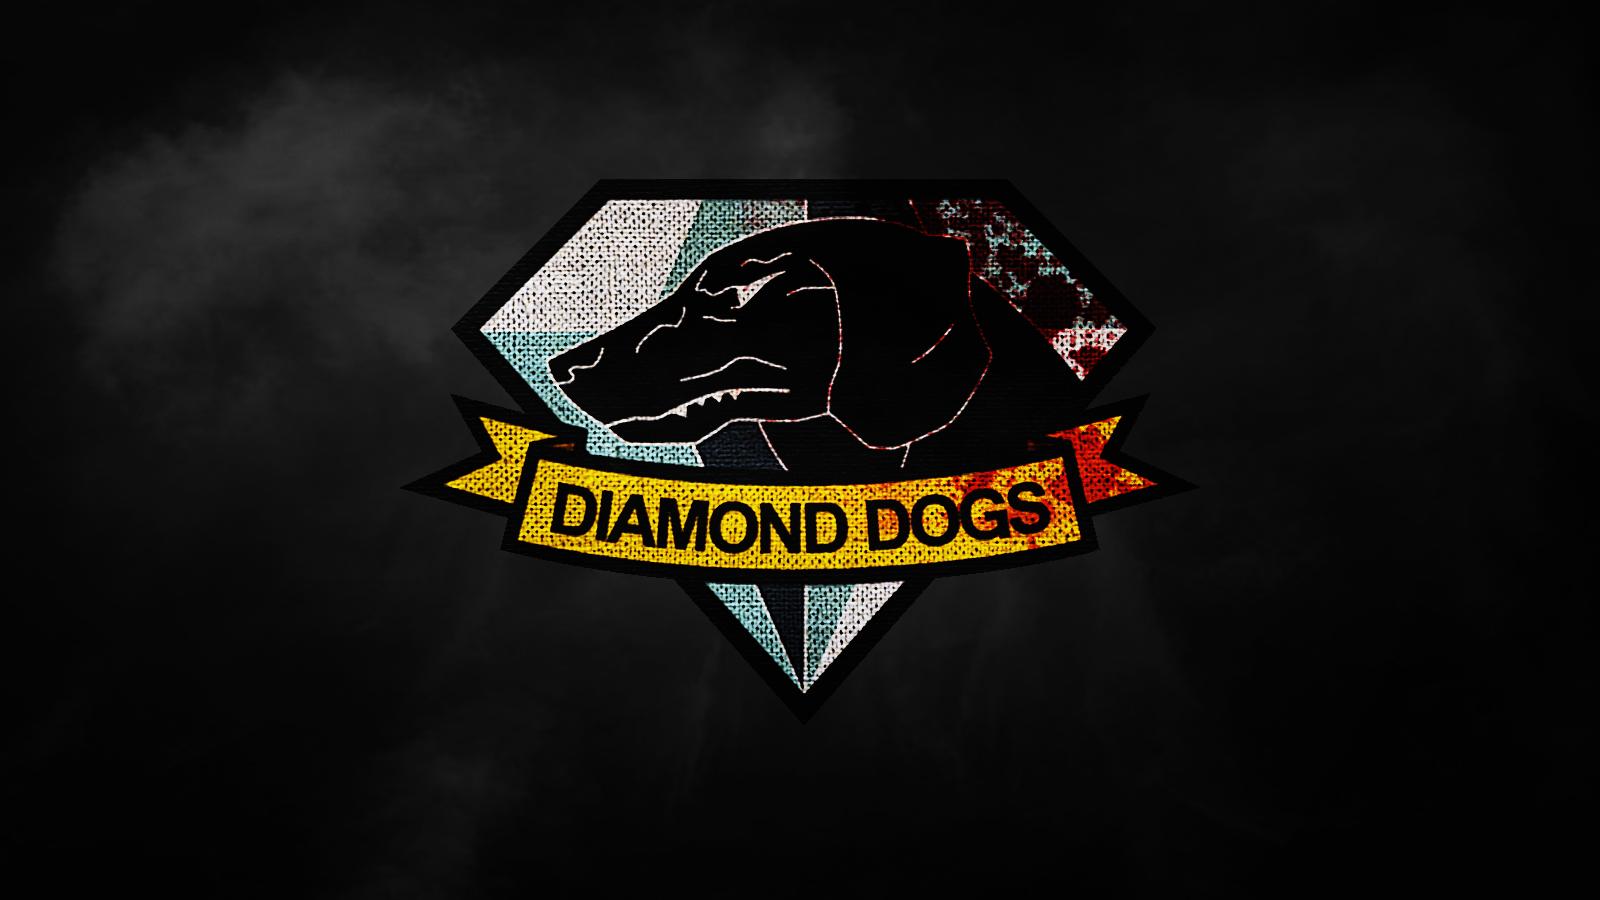 Mgsv Diamond Dogs Patch Wallpaper I